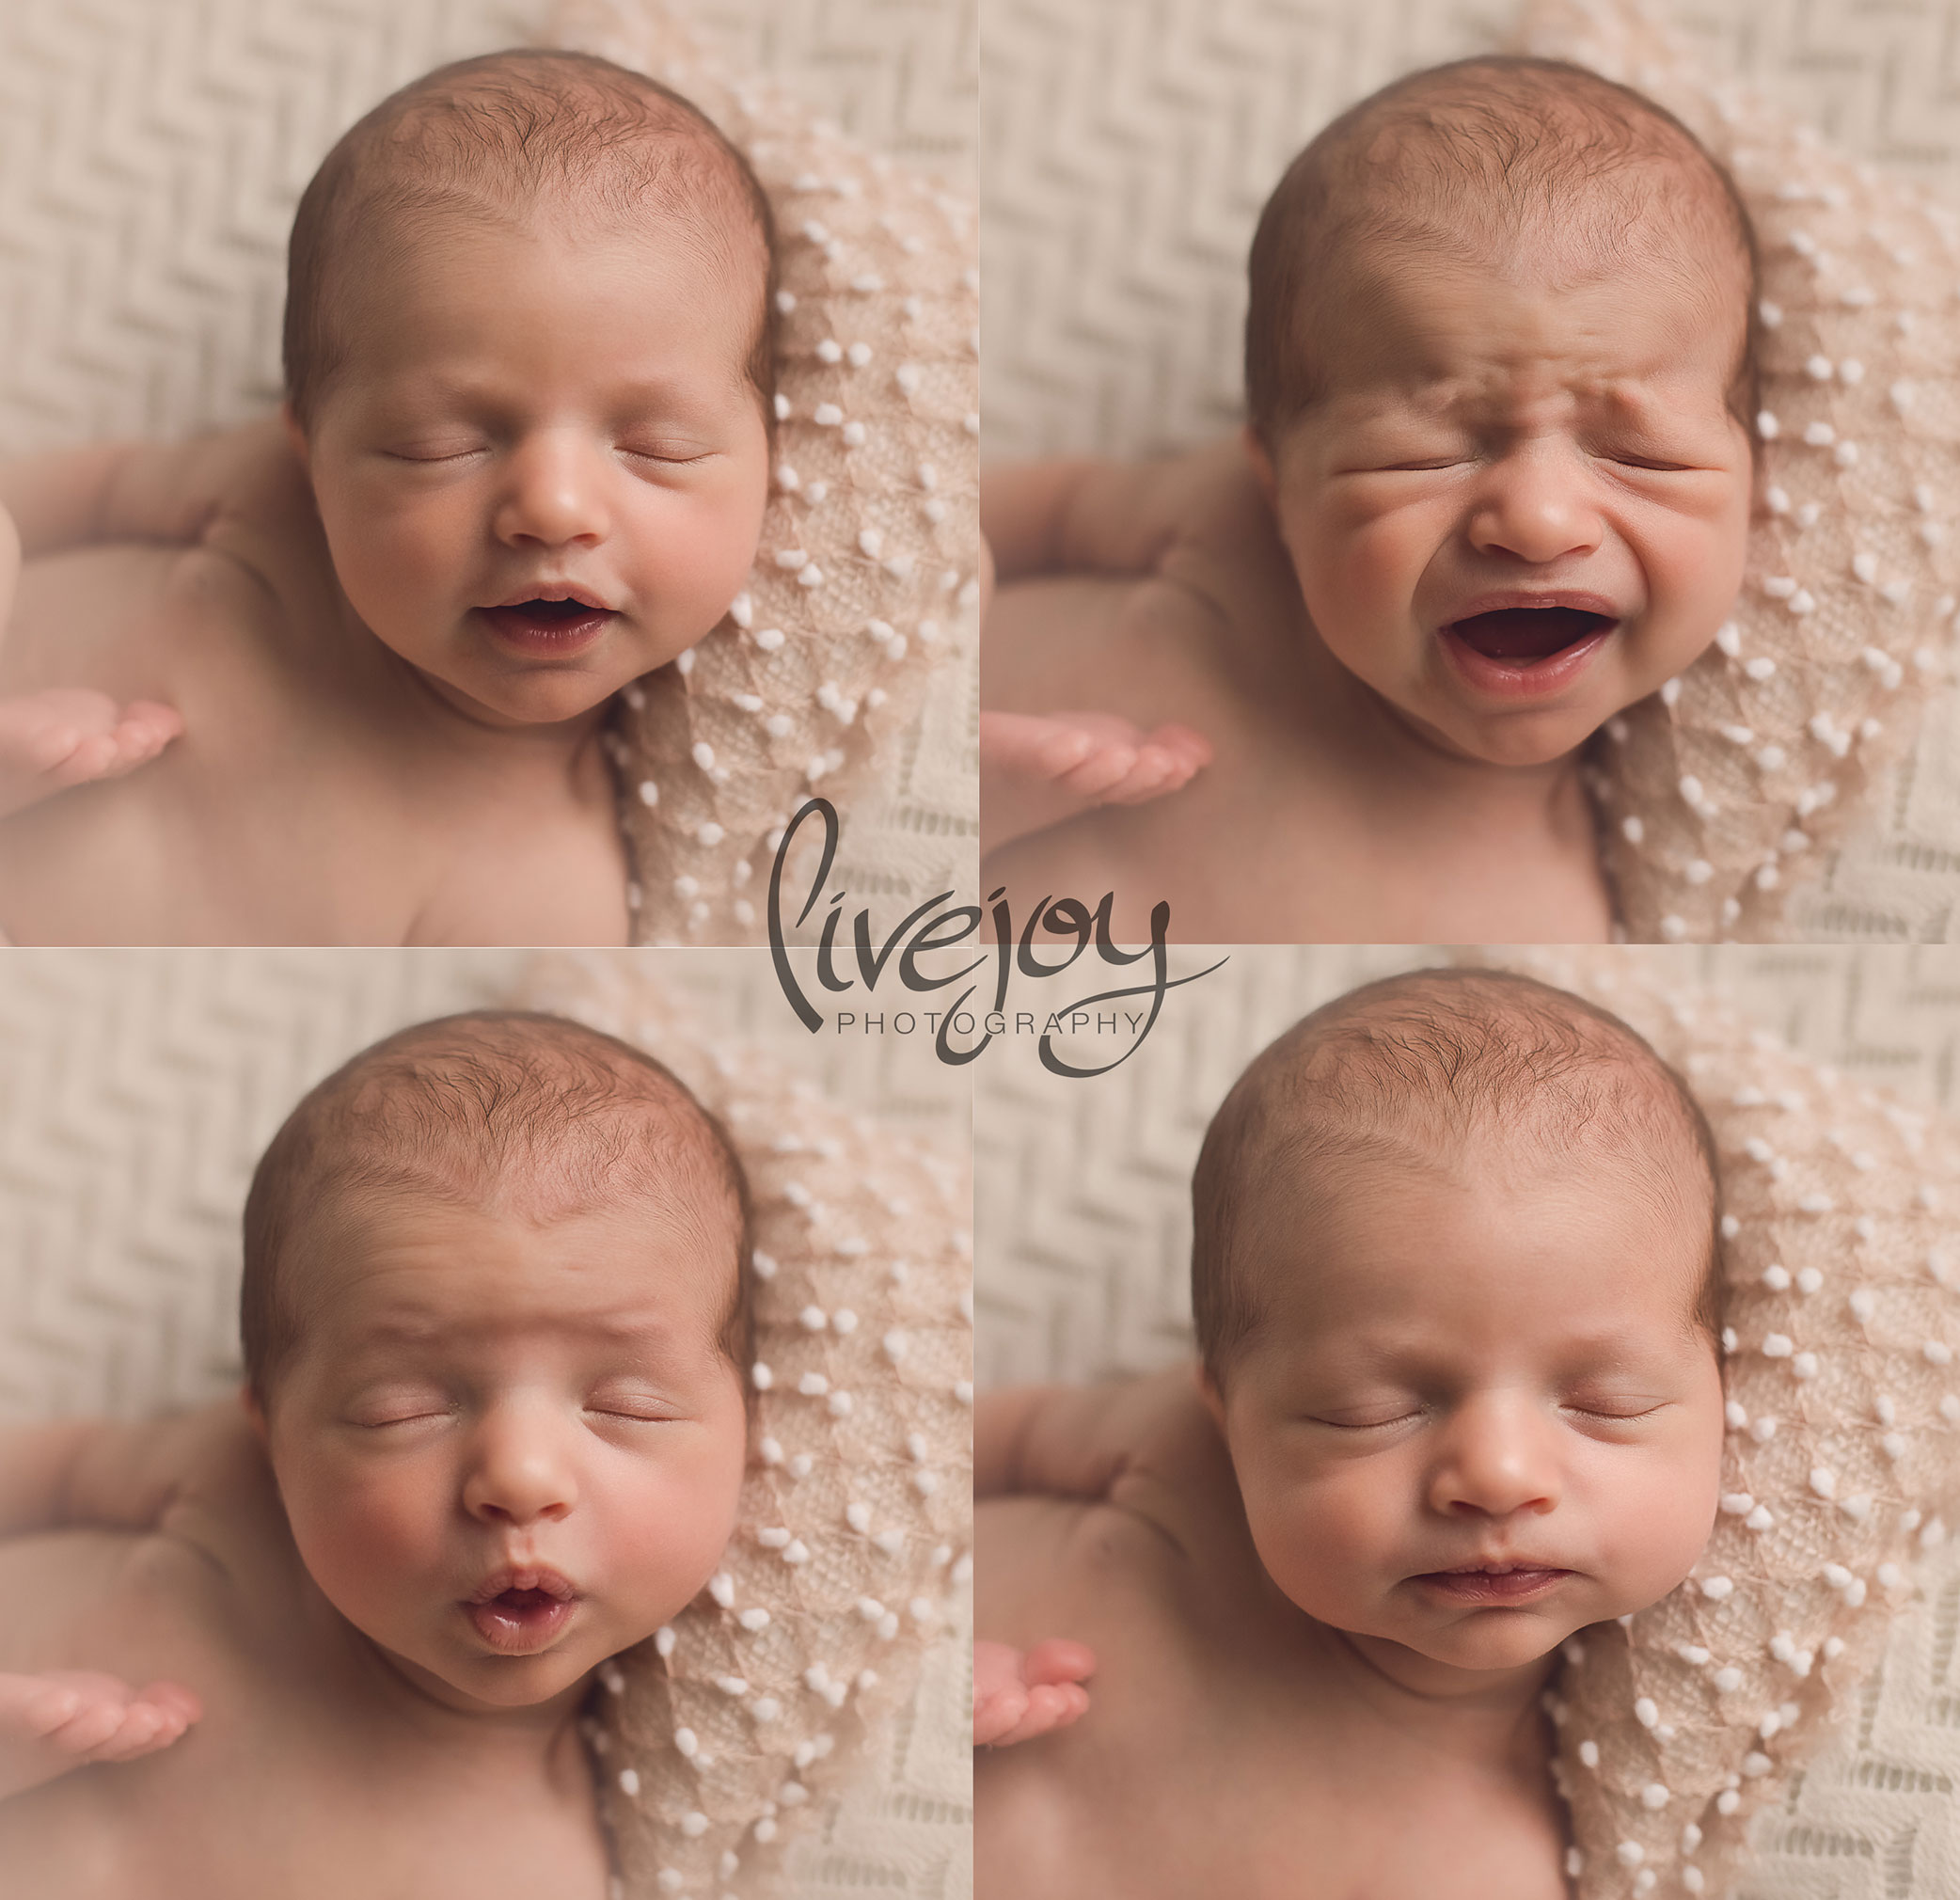 Newborn Photography | Oregon | Livejoy Photography